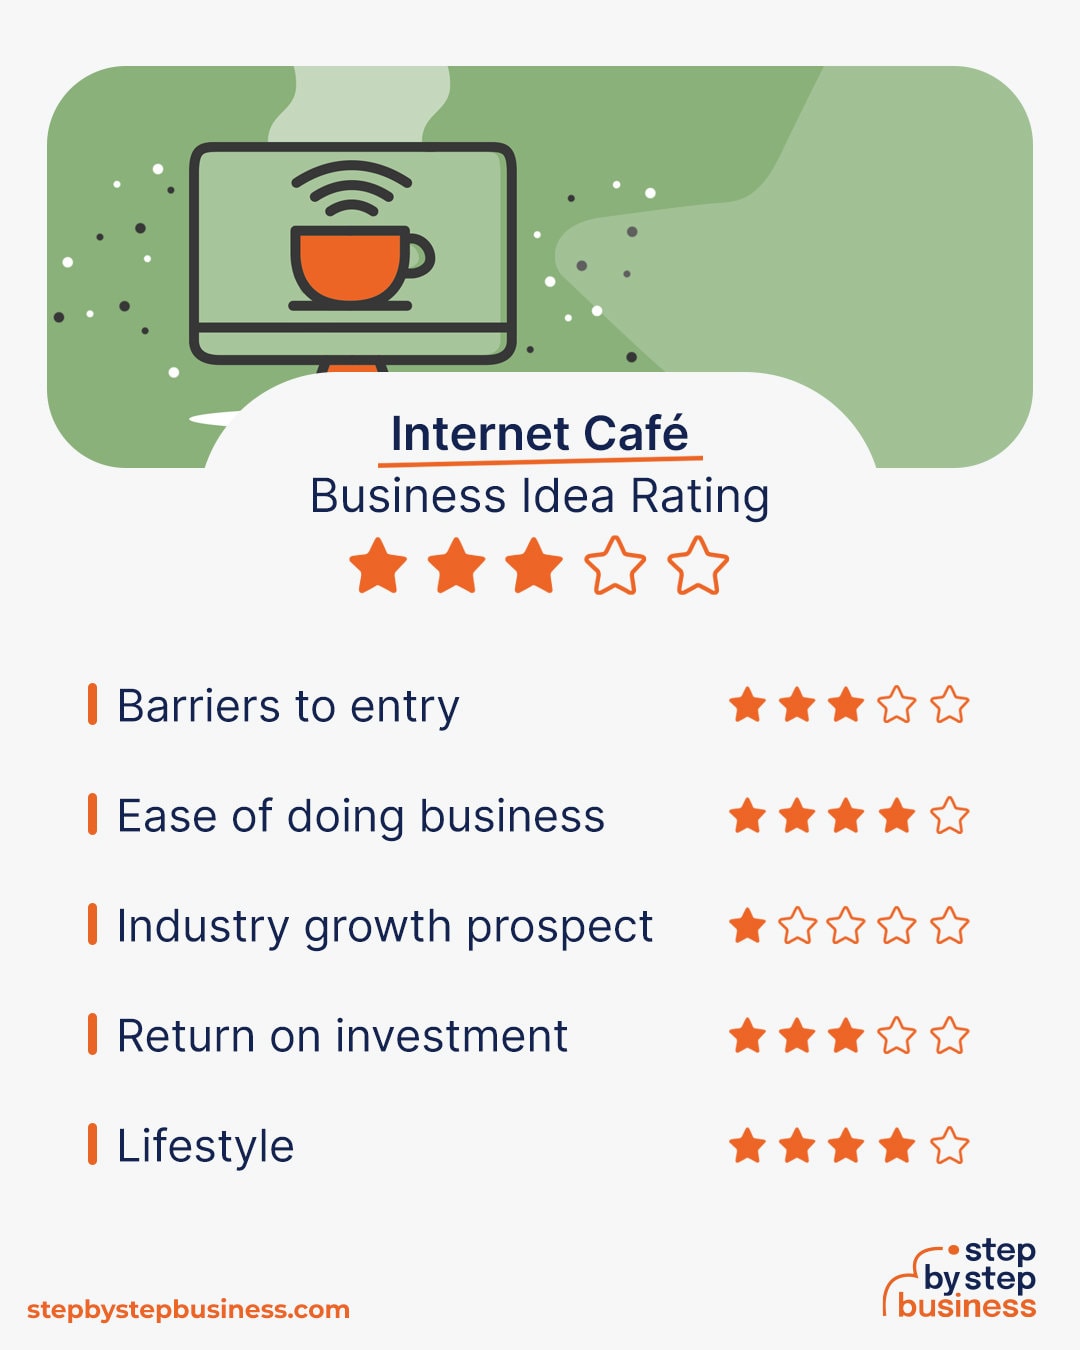 Internet Cafe business idea rating